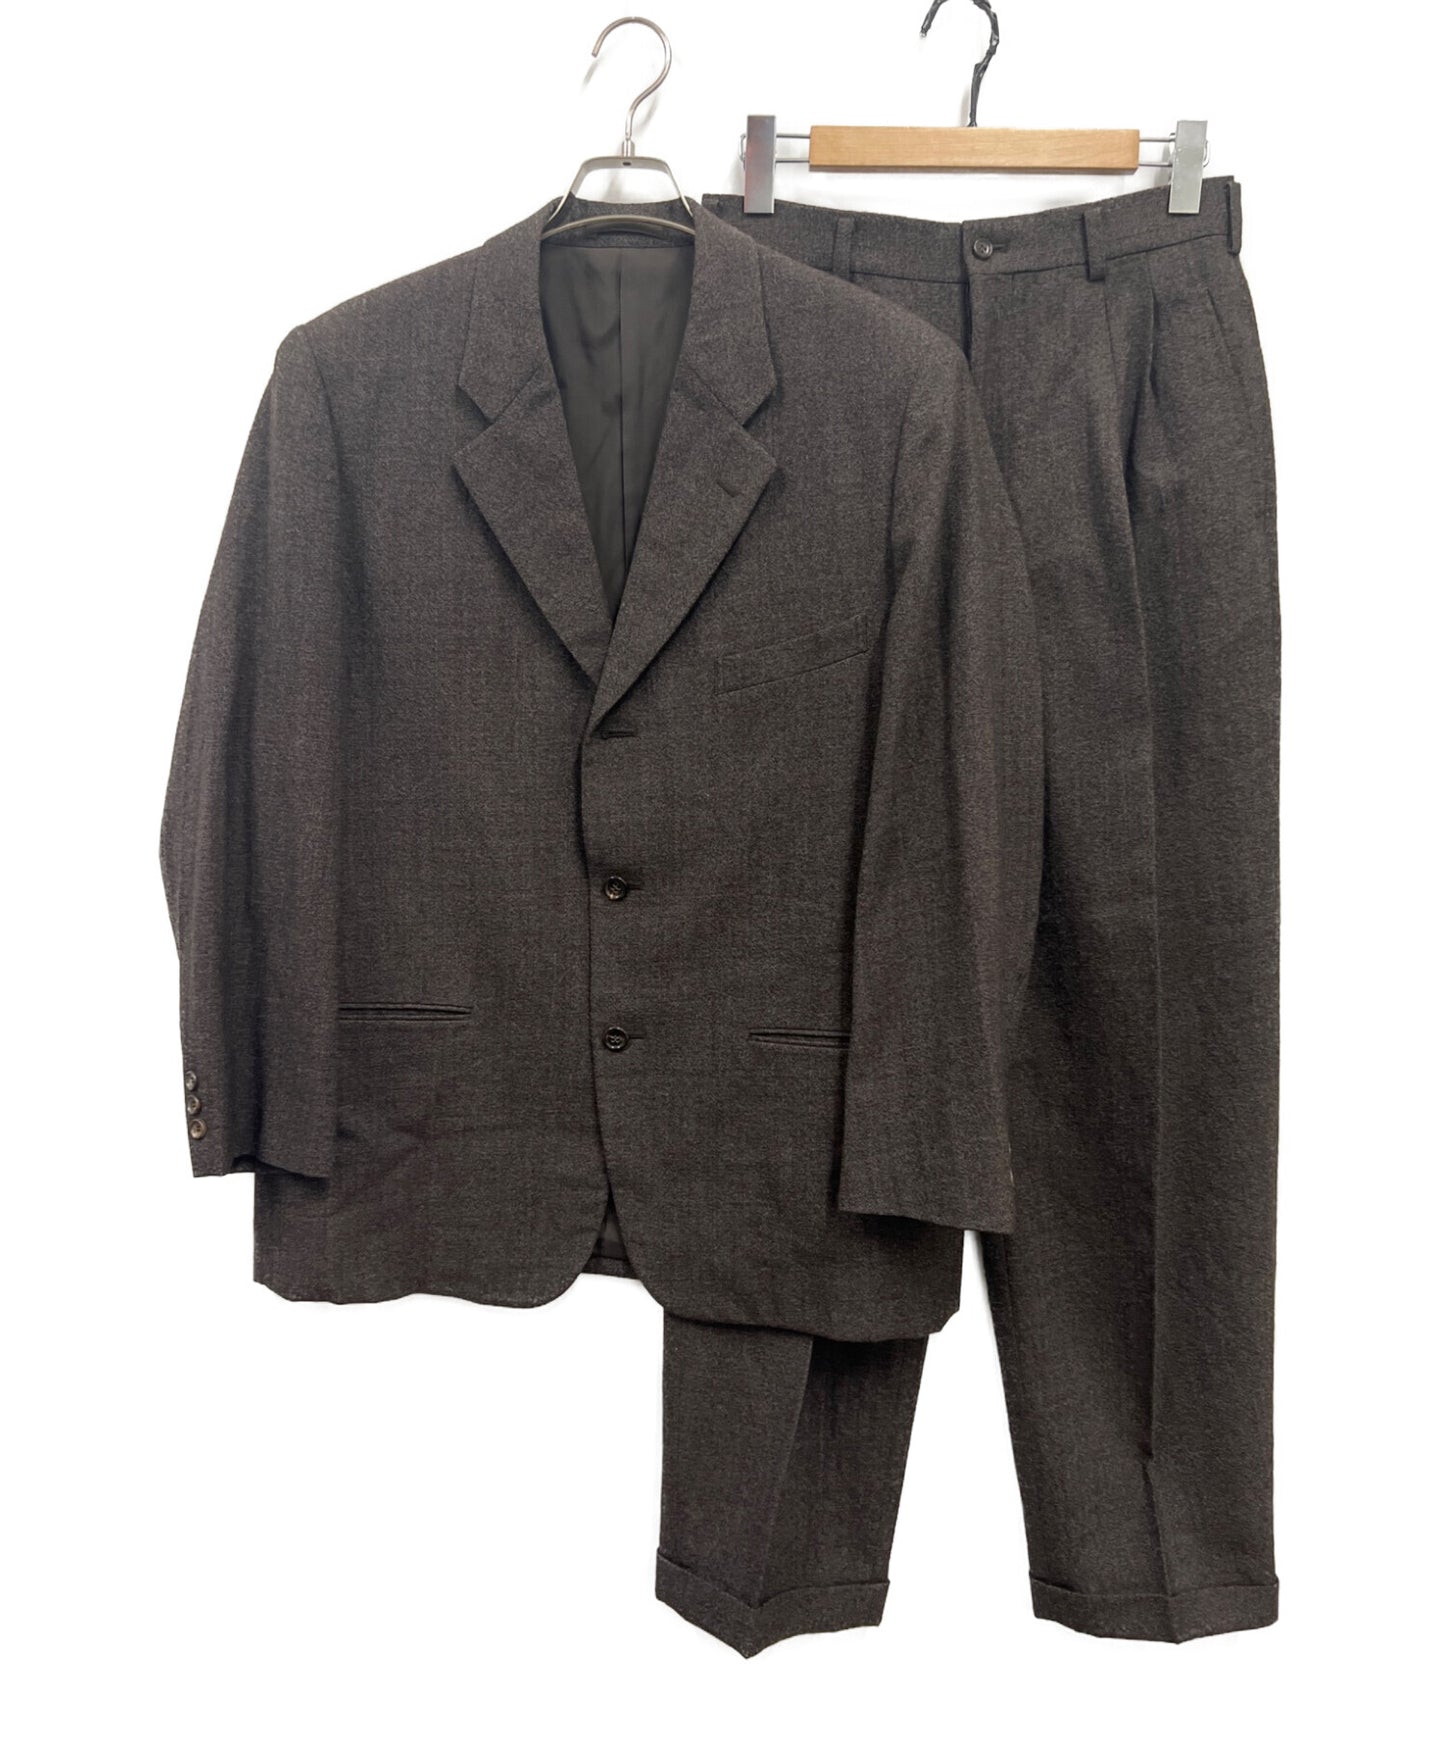 COMME des GARCONS HOMME PLUS suit that can be worn as a set-up D-TK9210